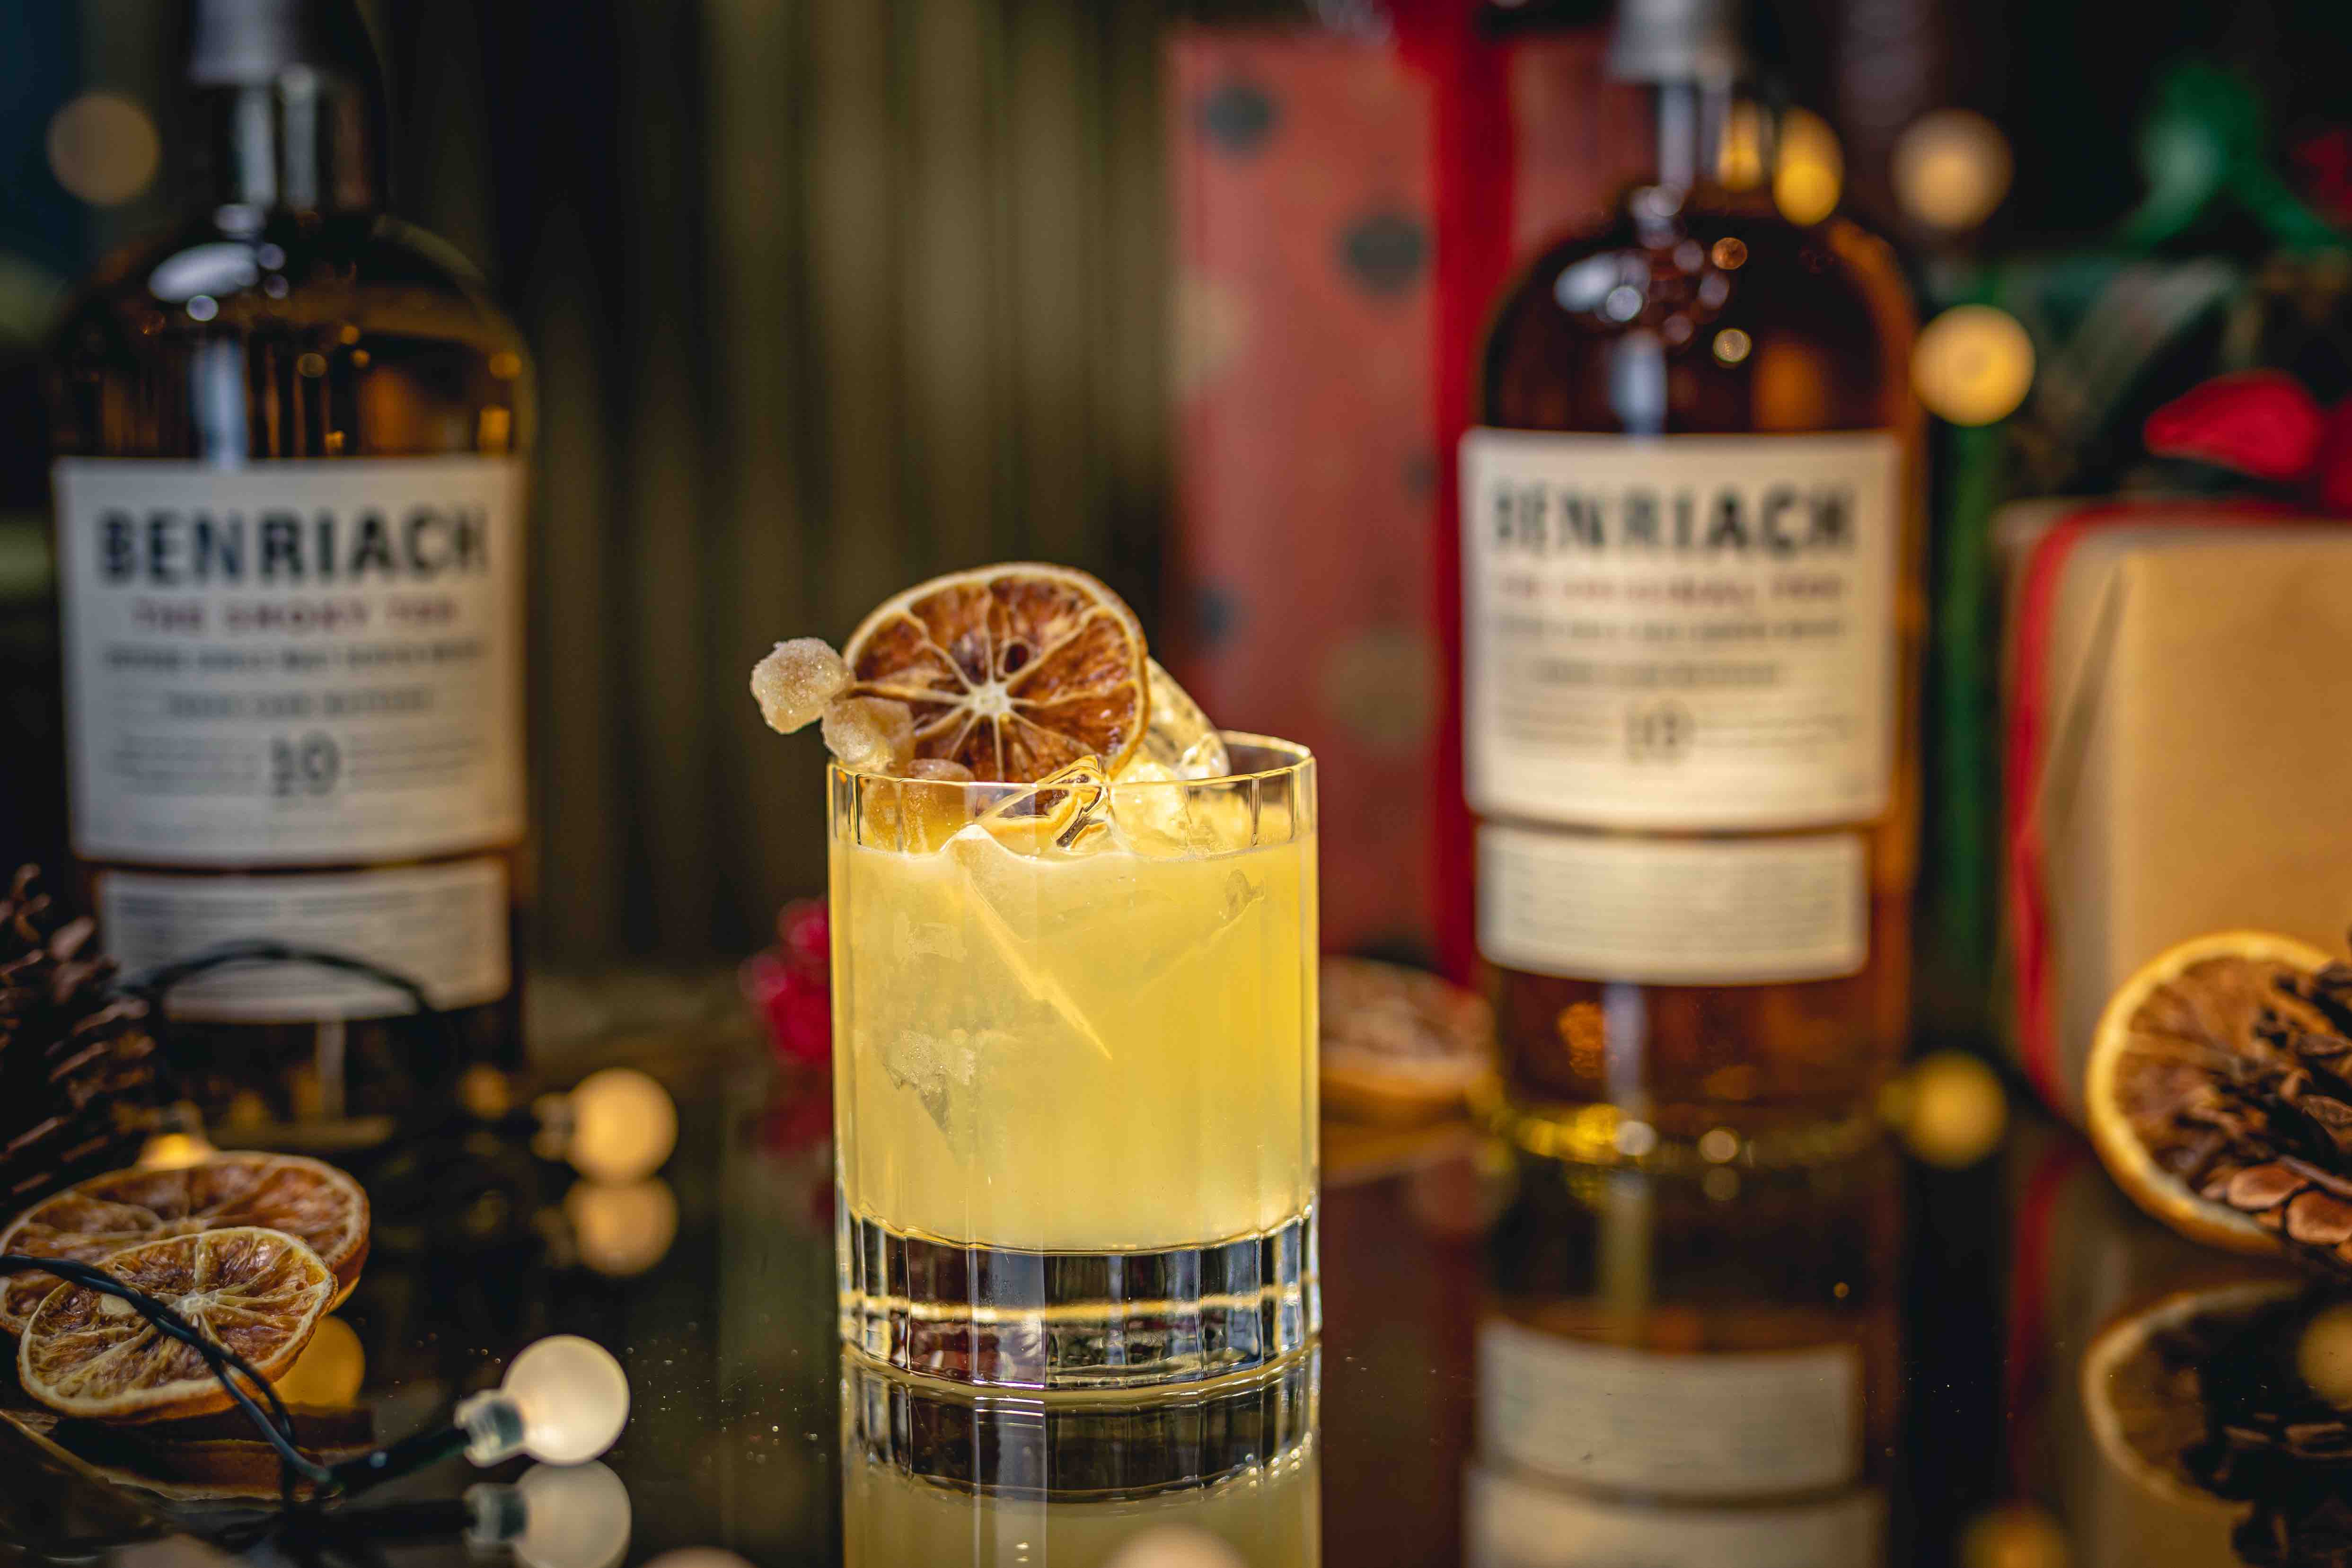 Benriach Penicillin cocktail - Cocktailrecept met whisky